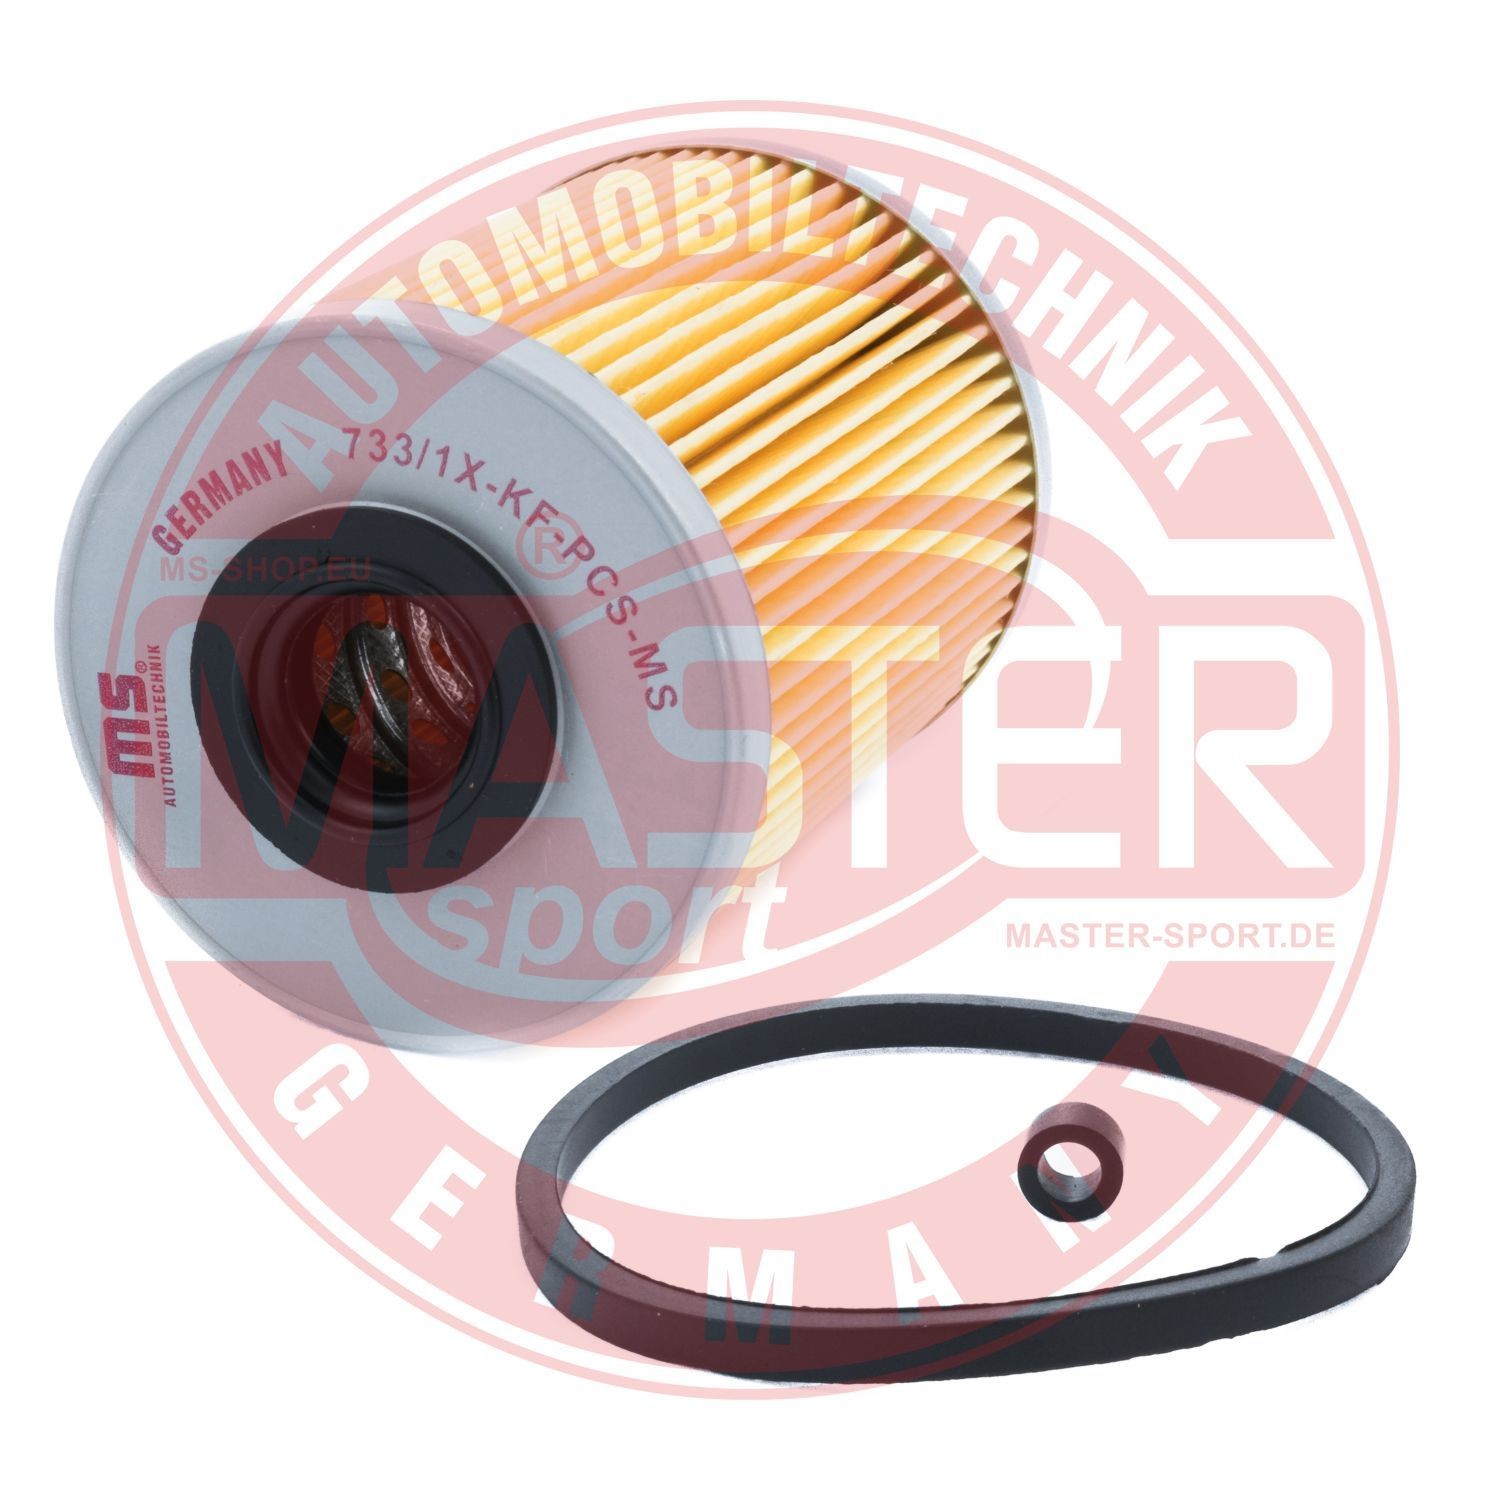 MASTER-SPORT 733/1X-KF-PCS-MS Fuel filter Filter Insert, with gaskets/seals